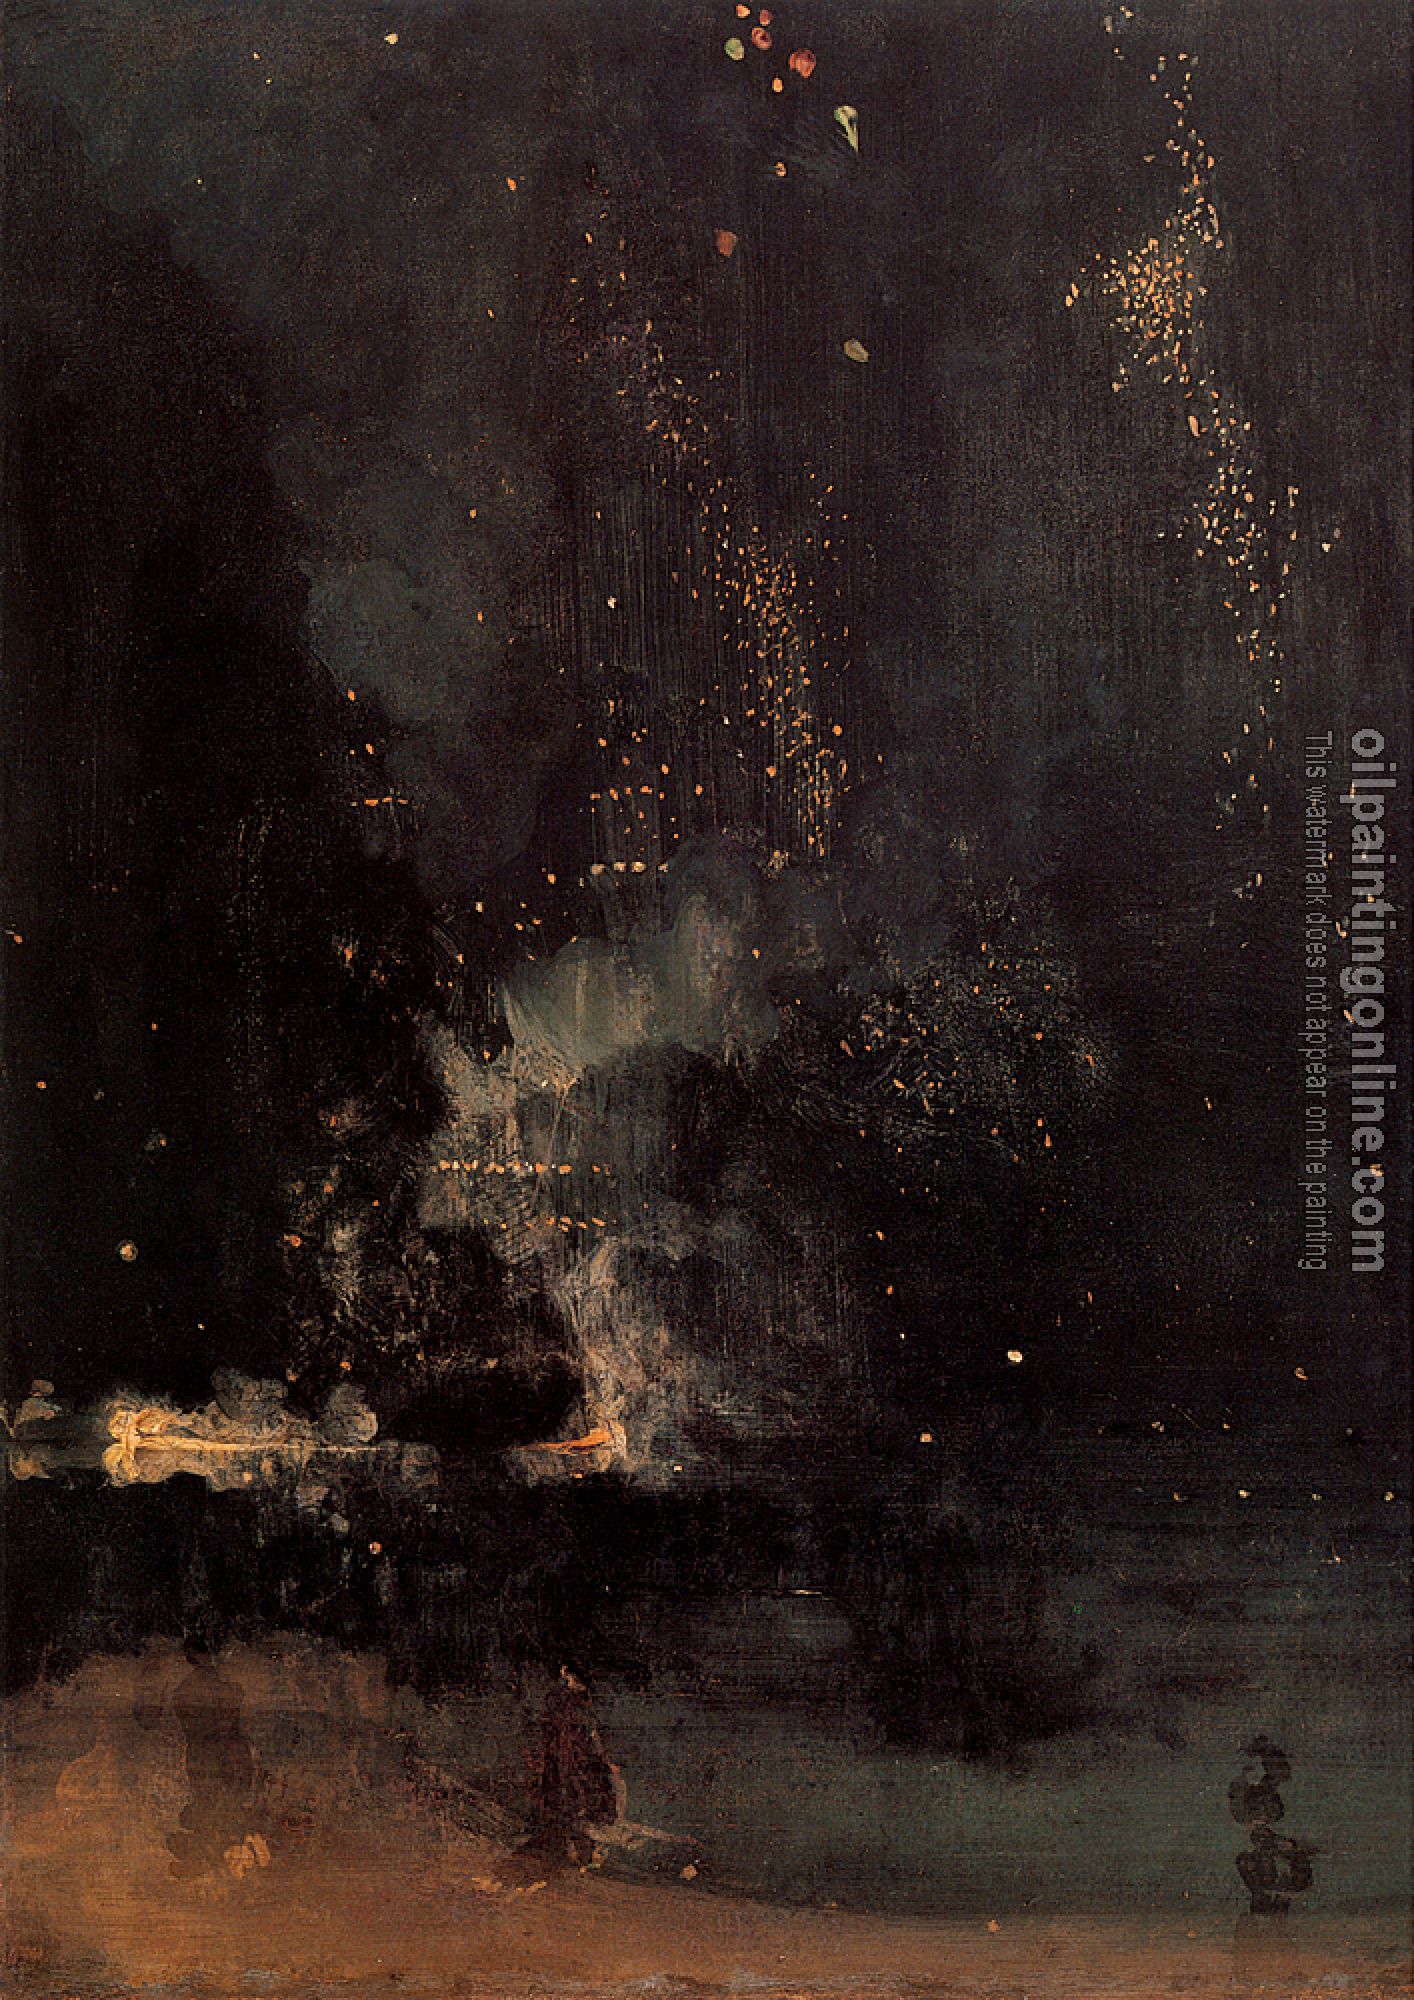 Whistler, James Abbottb McNeill - The Falling Rocket